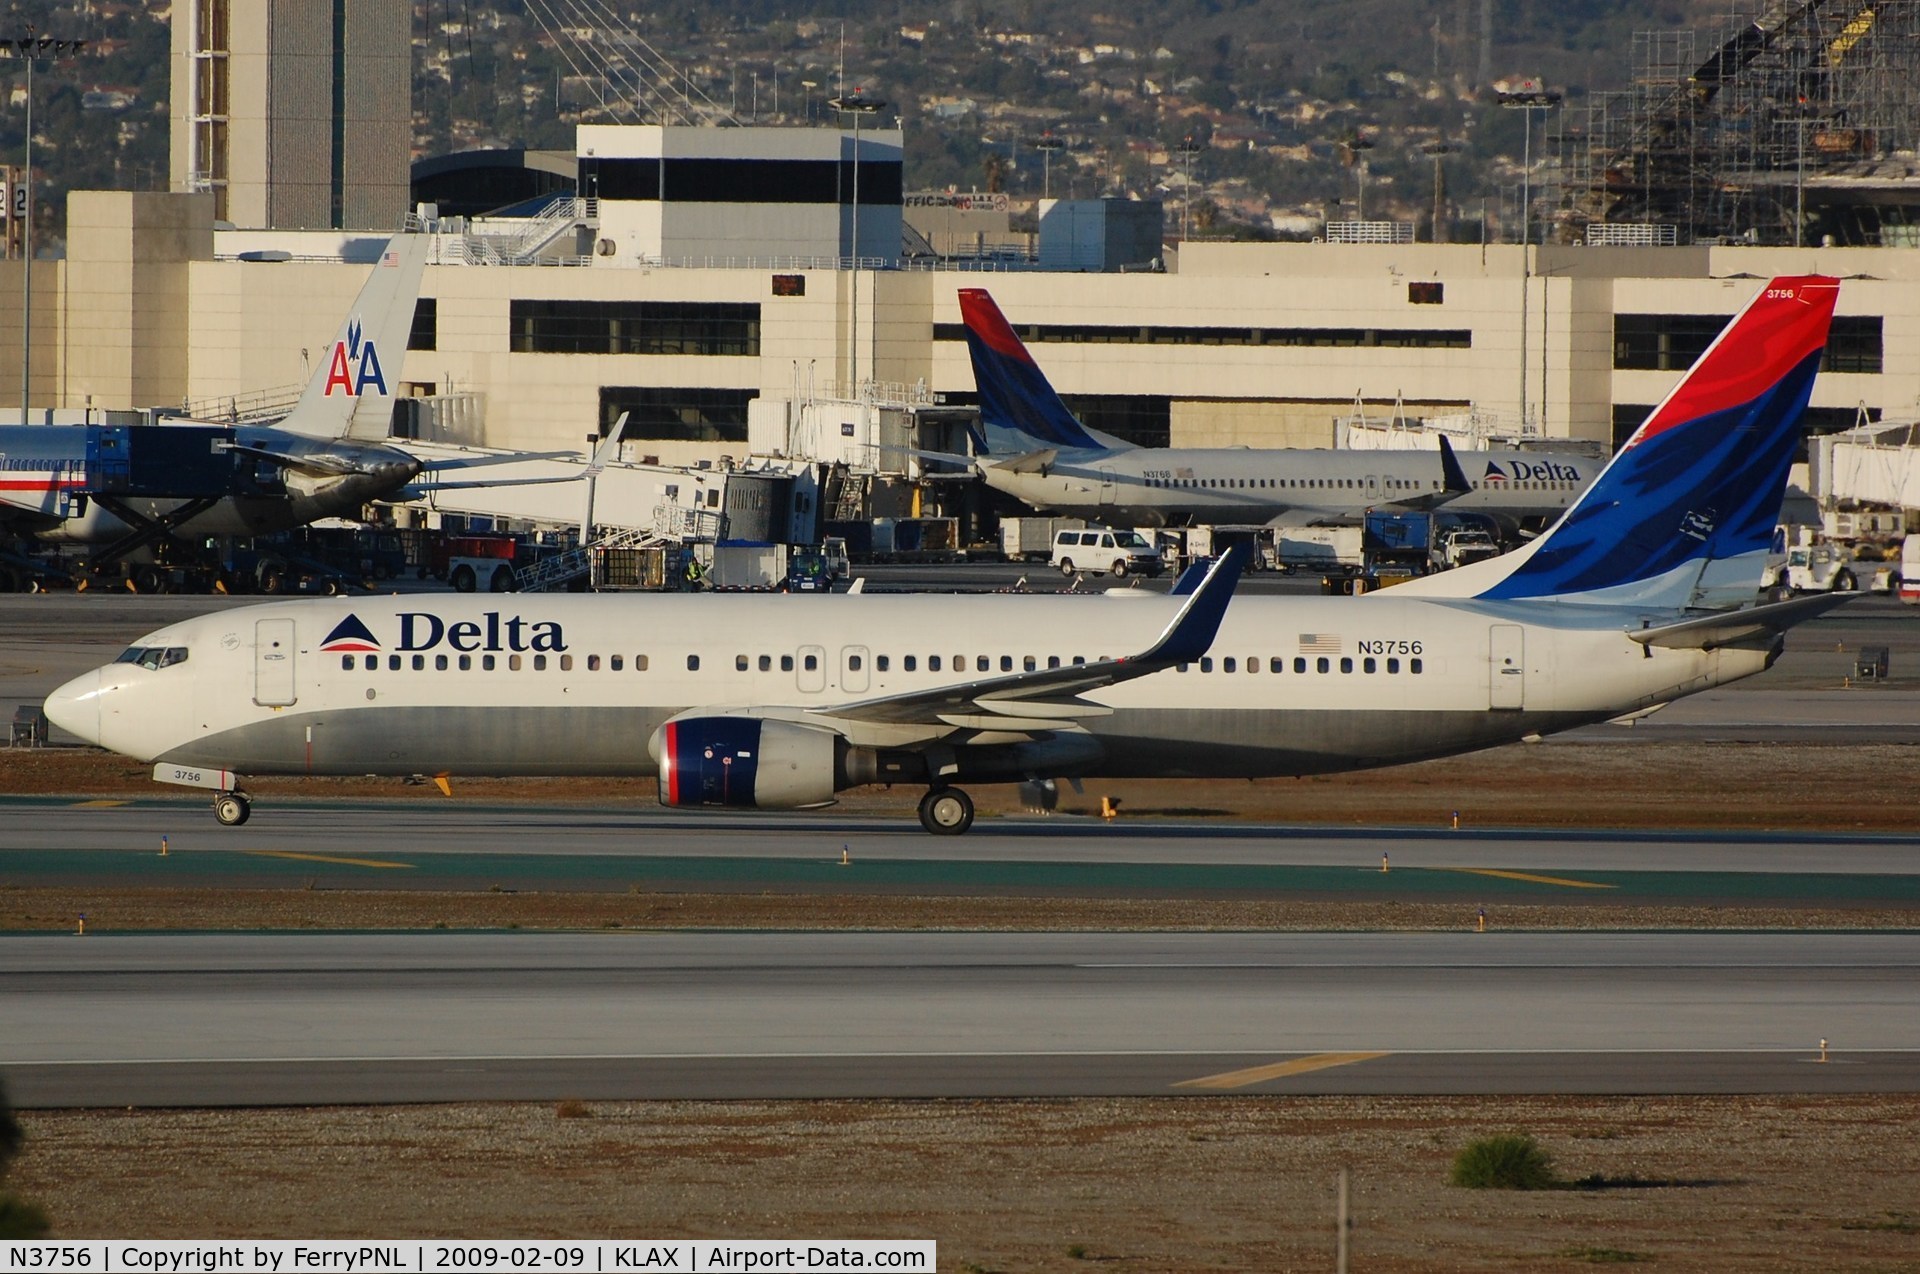 N3756, 2001 Boeing 737-832 C/N 30493, Delta B738 vacating the runway in LAX